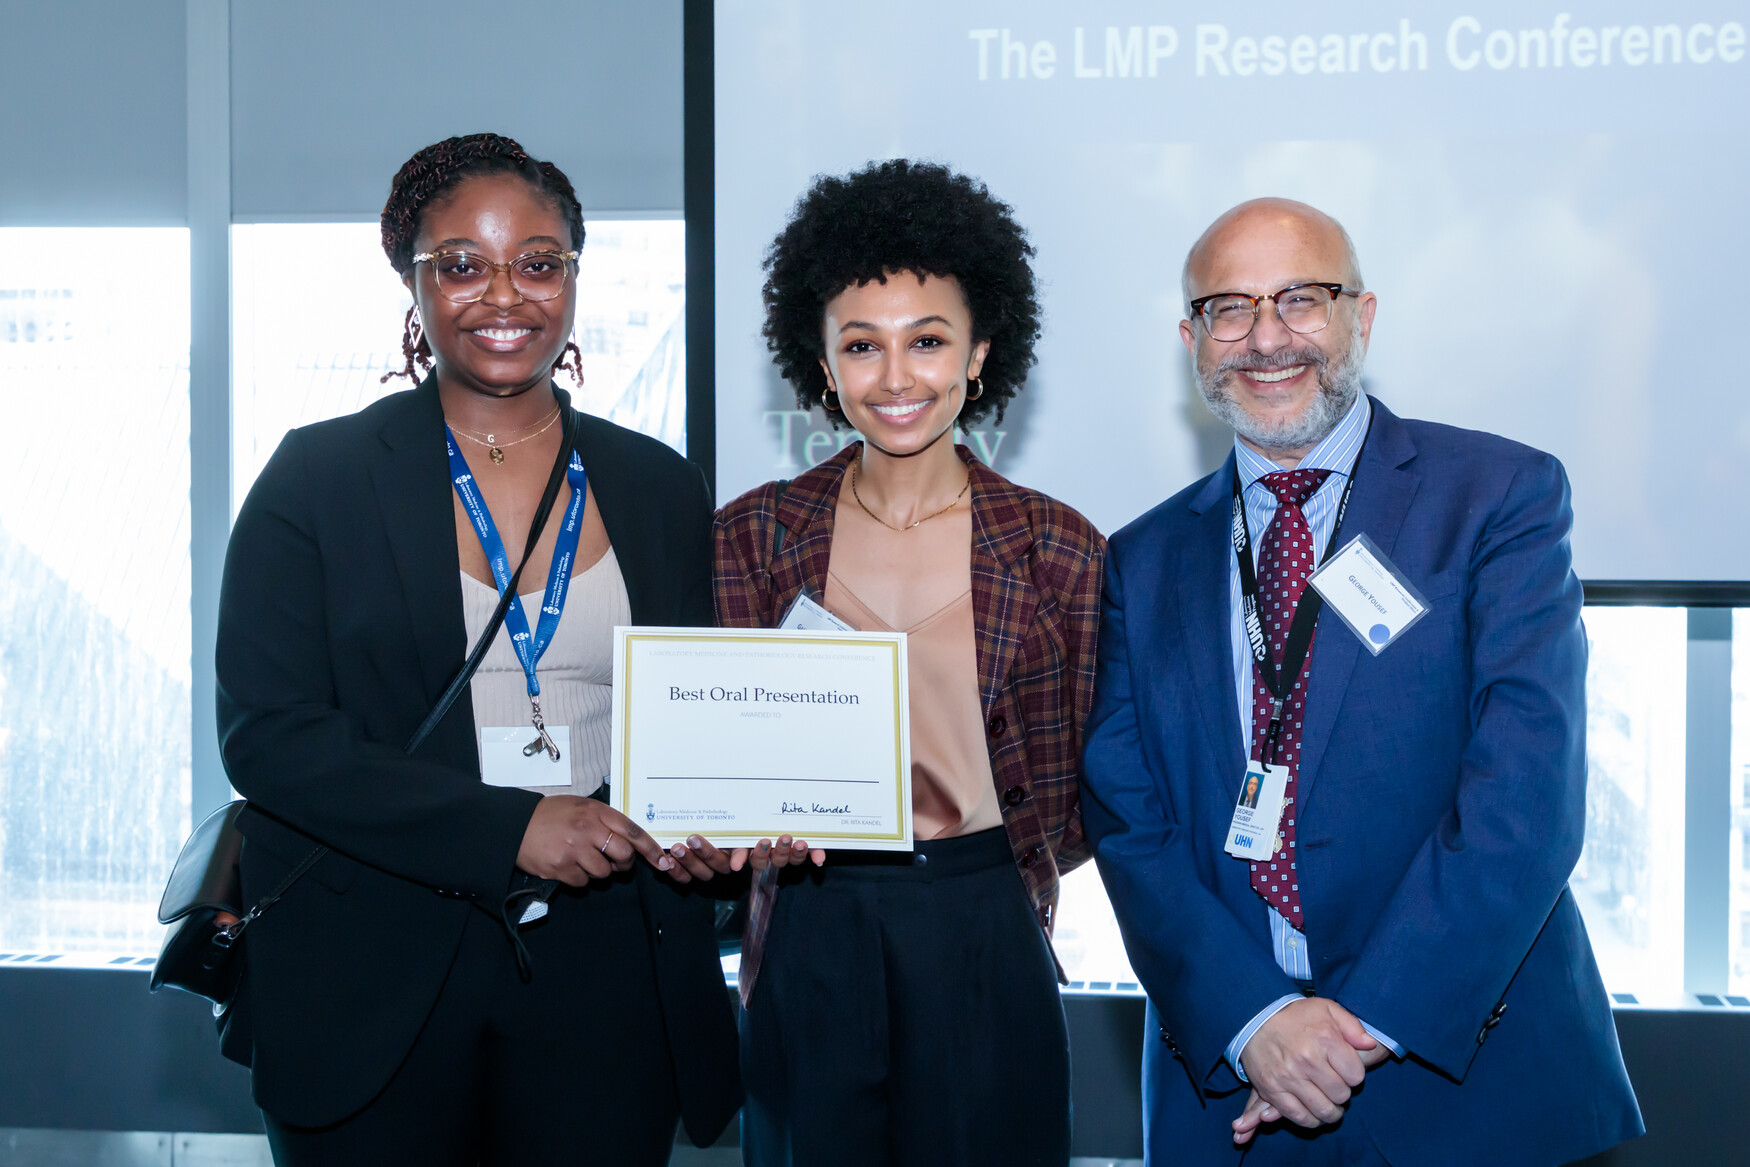 Gabrielle Retta and Gemma Kabeya winning an award at LMP's research conference 2022